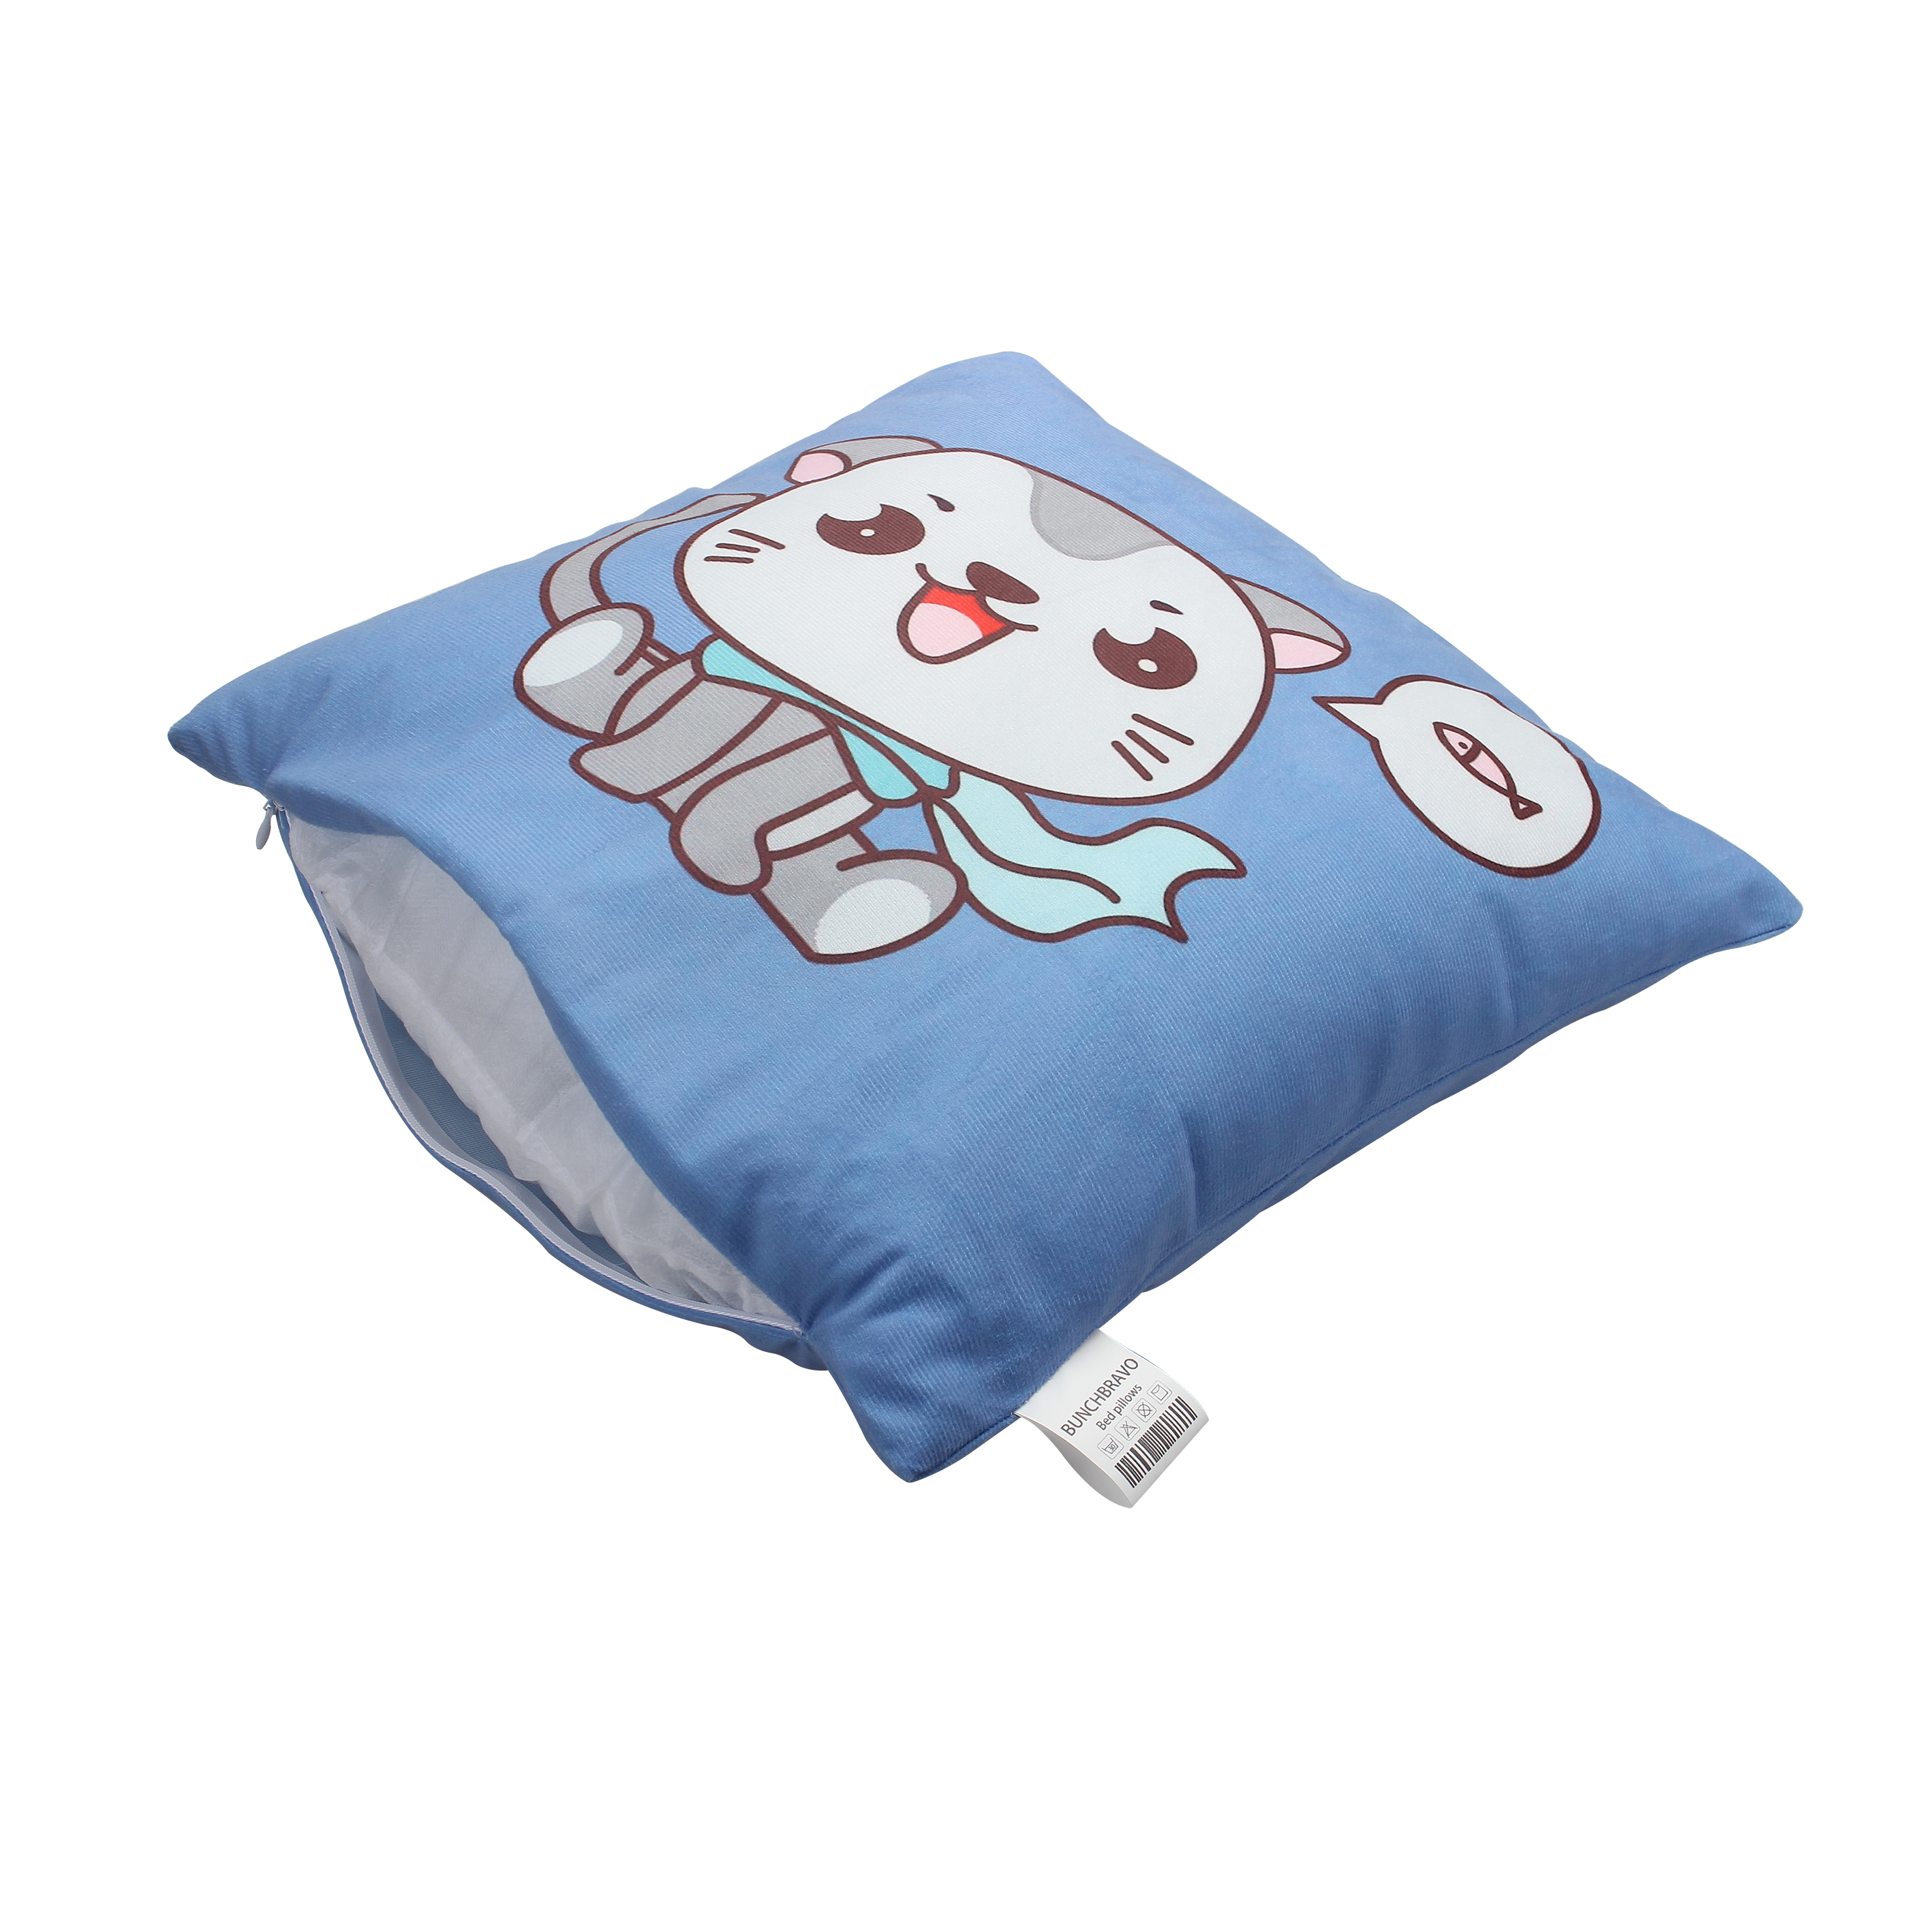 BUNCHBRAVO Bed Pillow Cartoon Plush Pillow Household Sofa Car Cushion Pillow 20X20 inches(2 Pack)